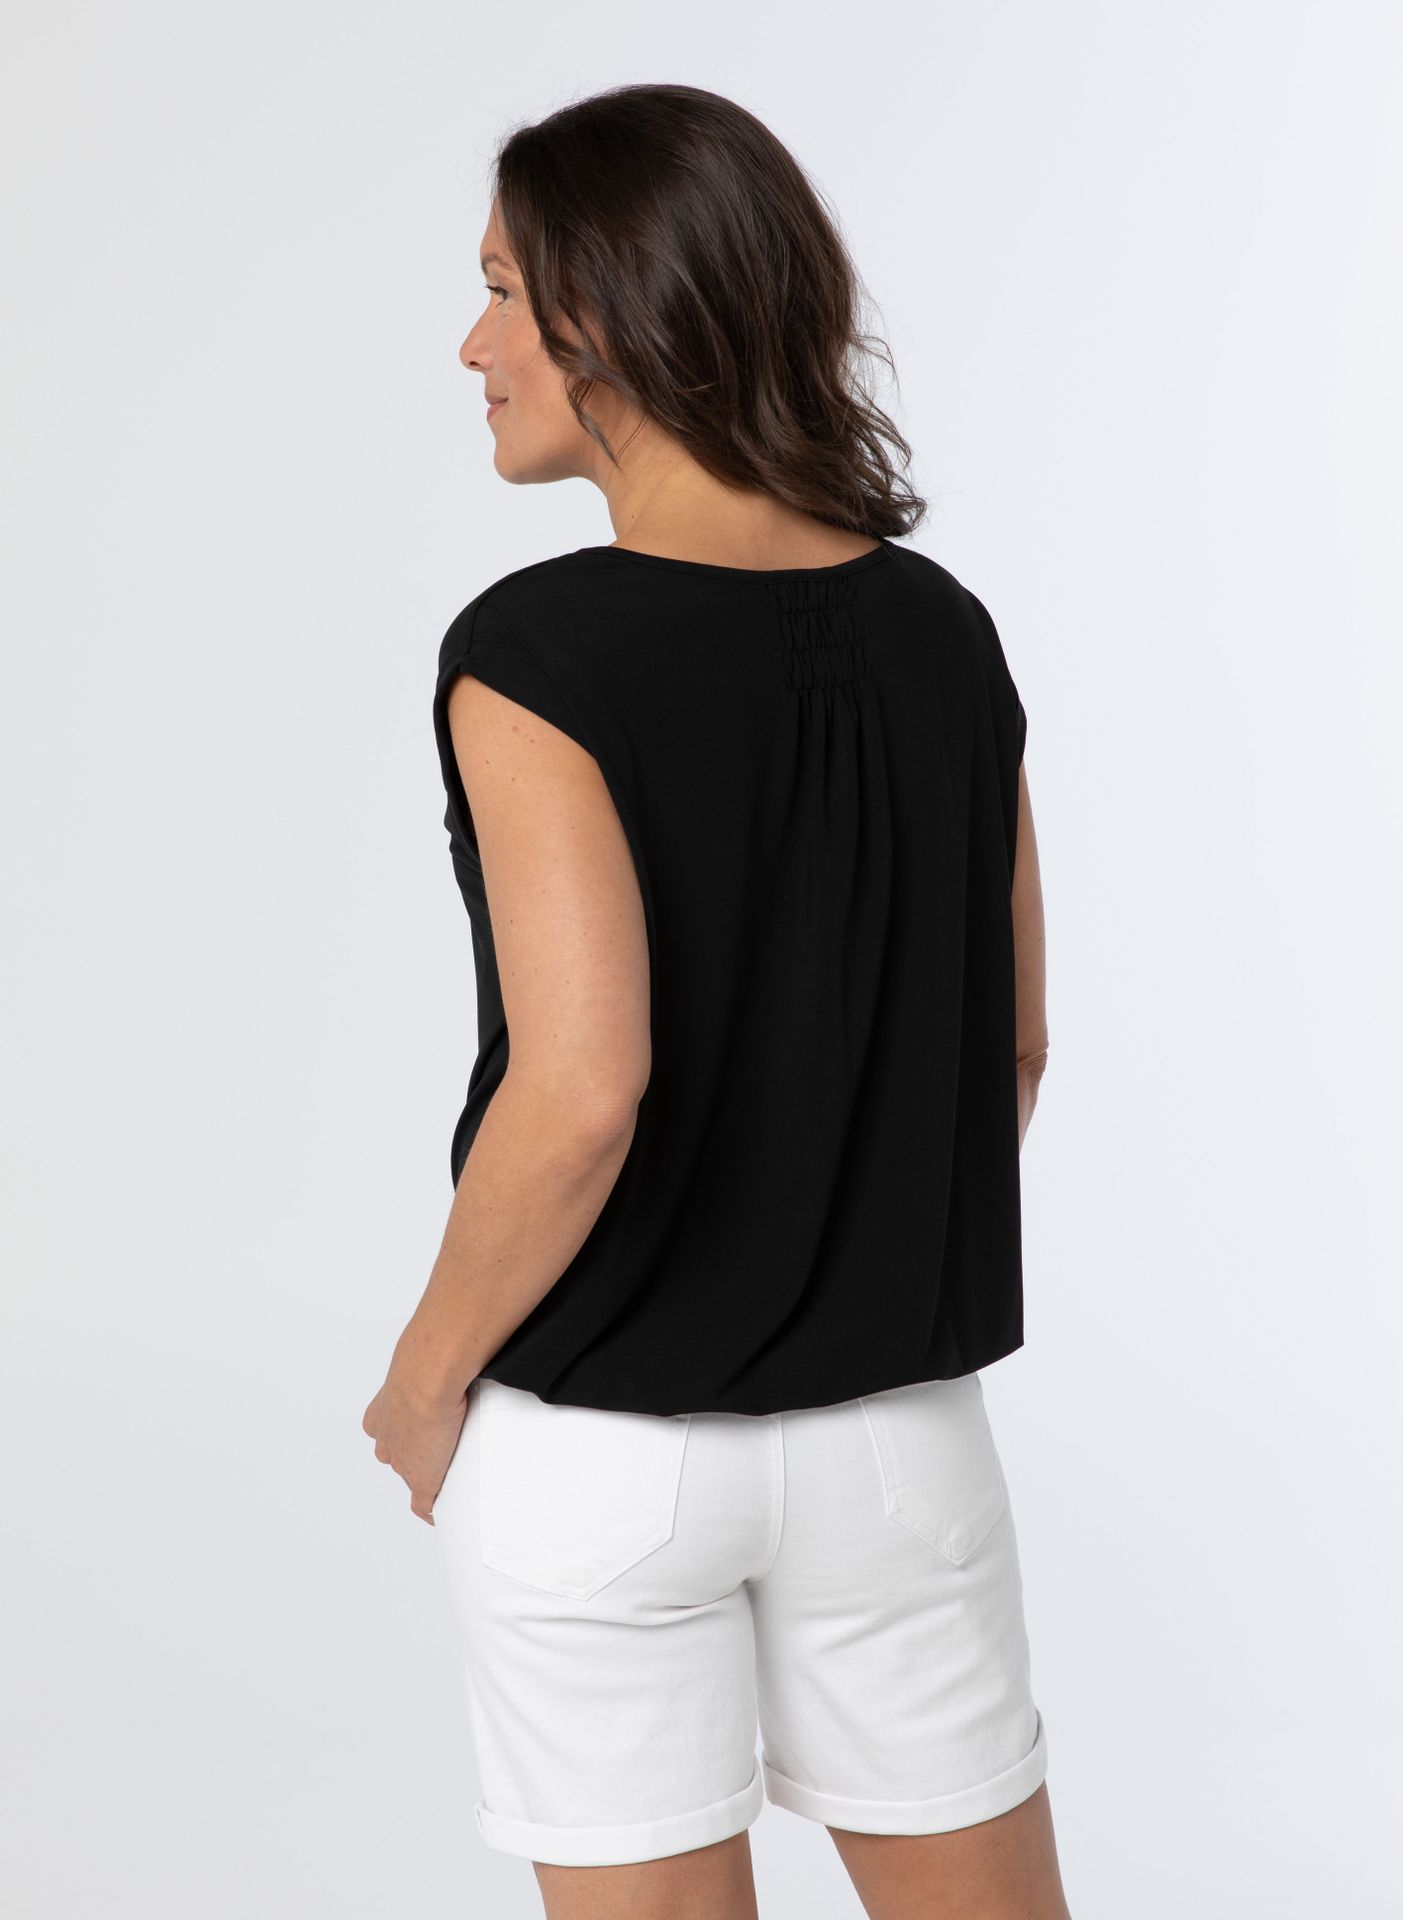 Norah Shirt zwart black 210284-001